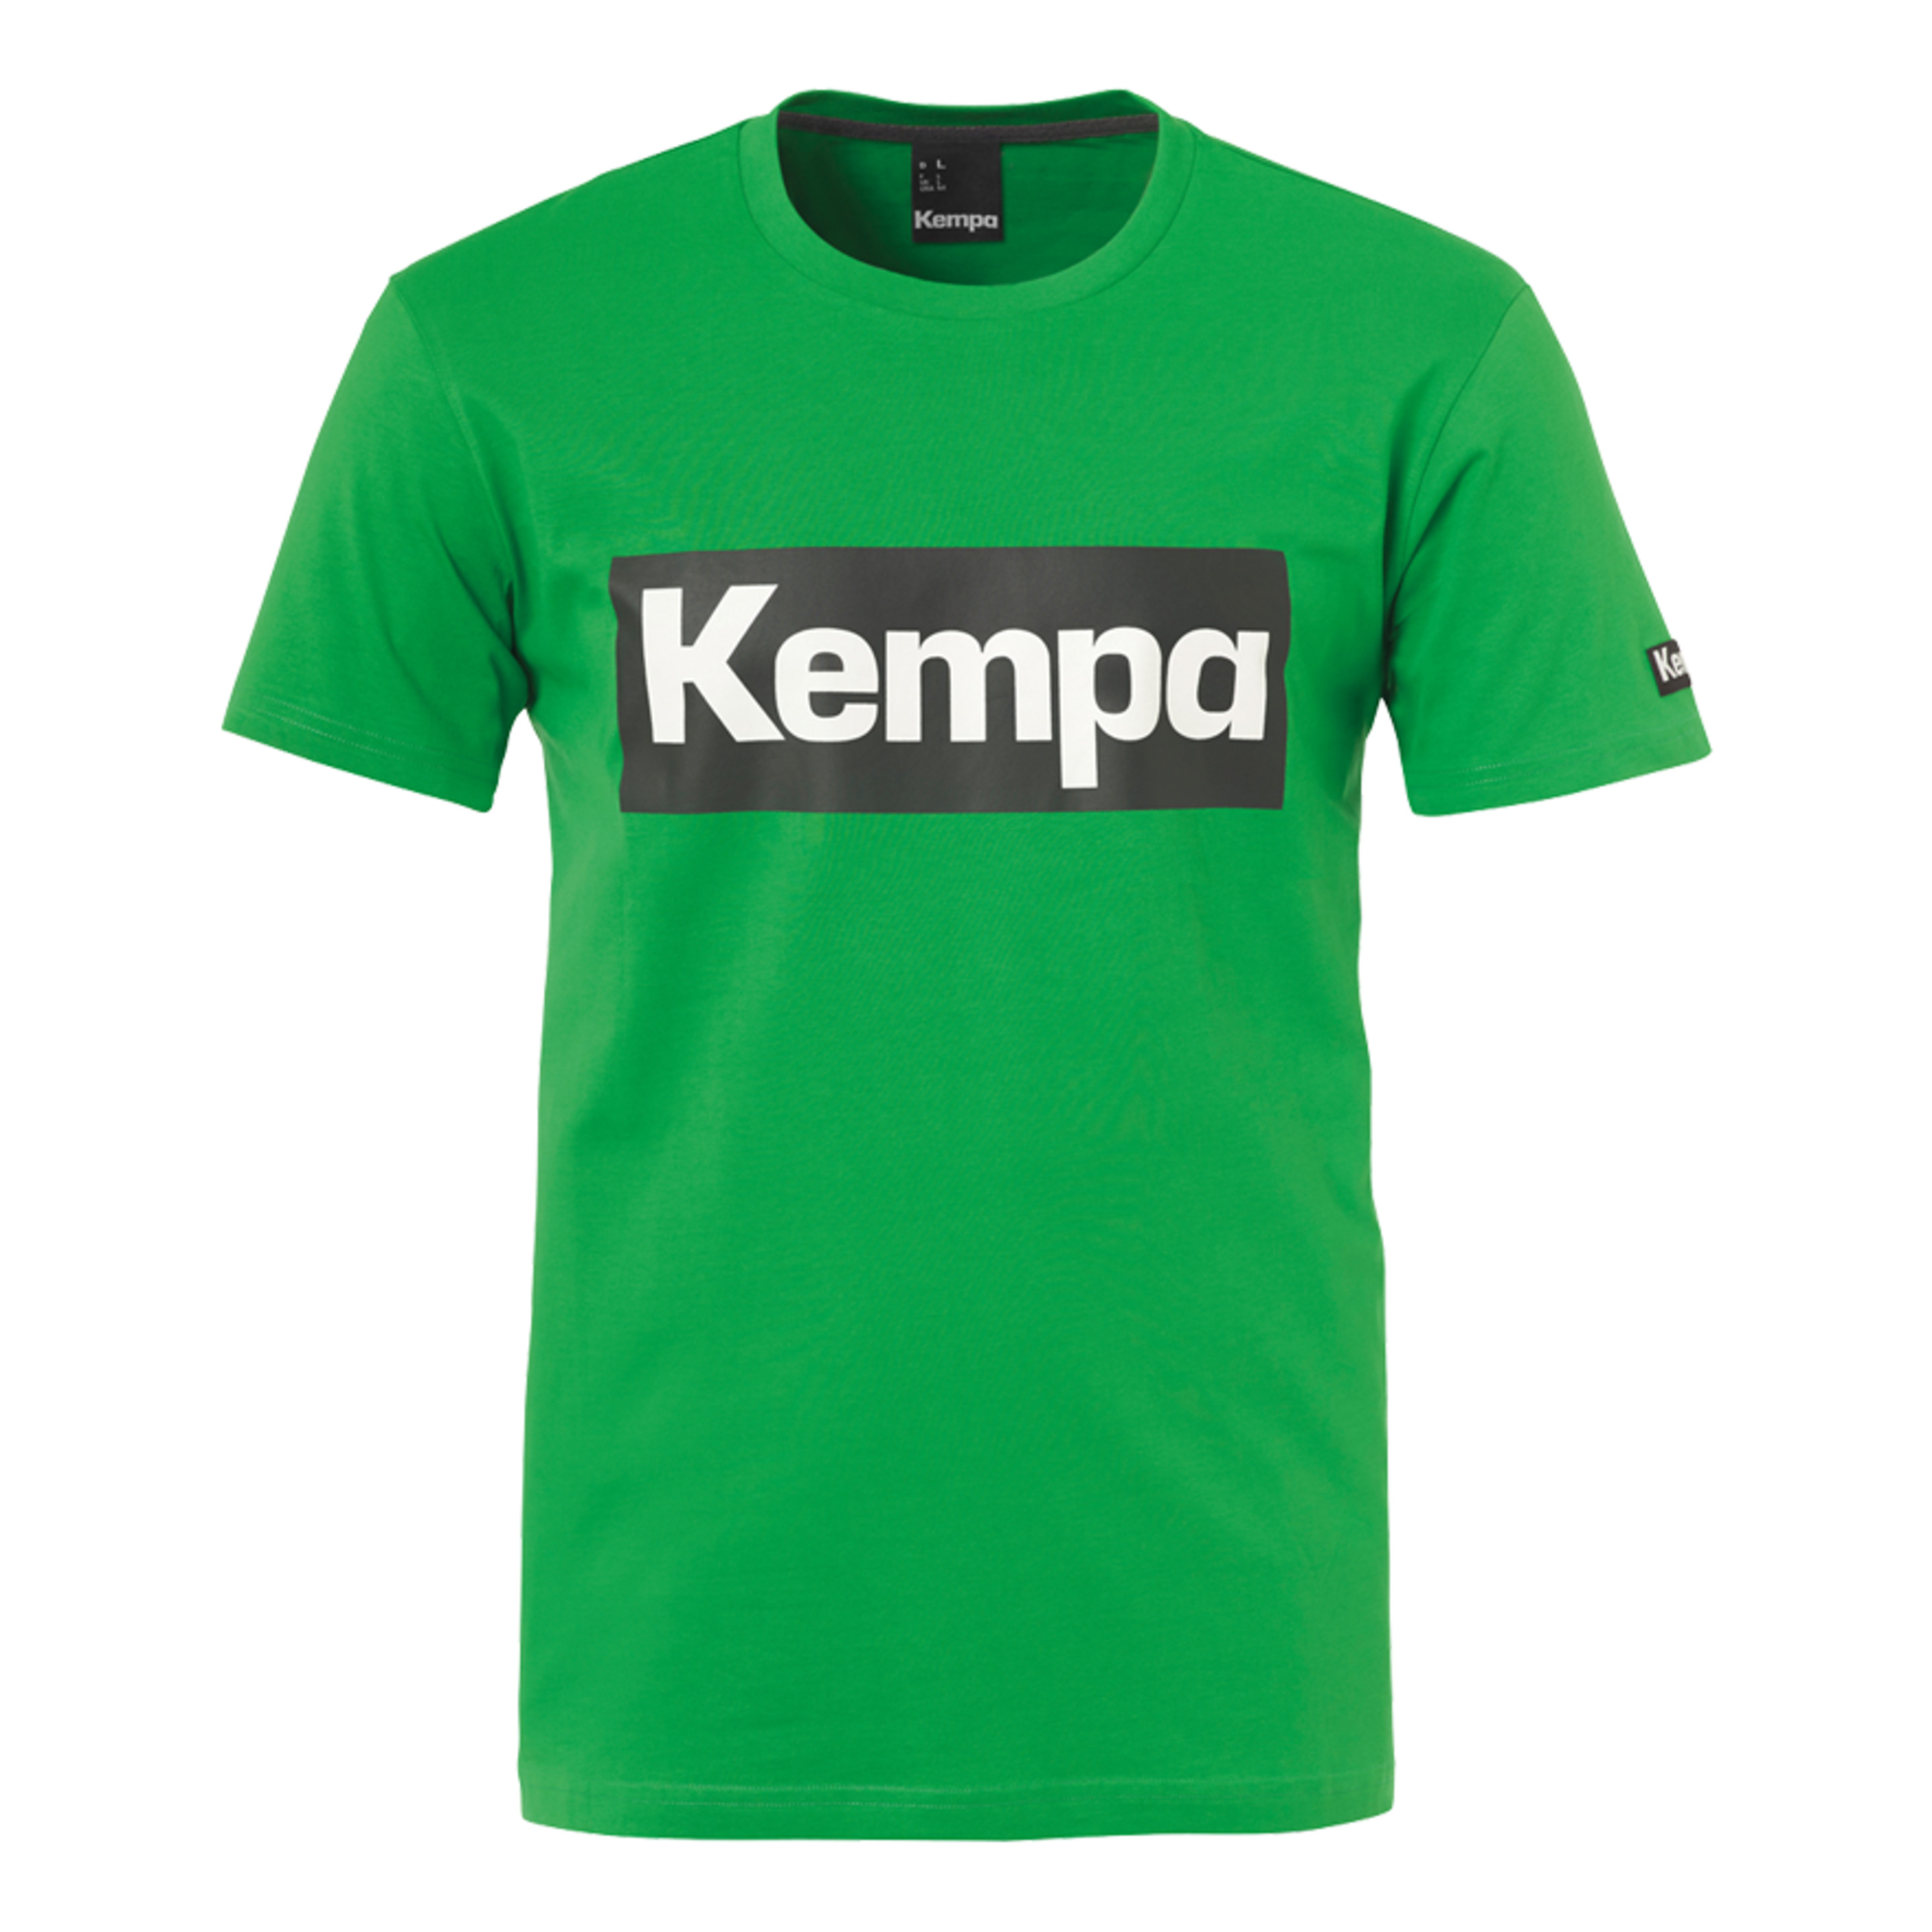 Promo Camiseta Verde Kempa - verde - 